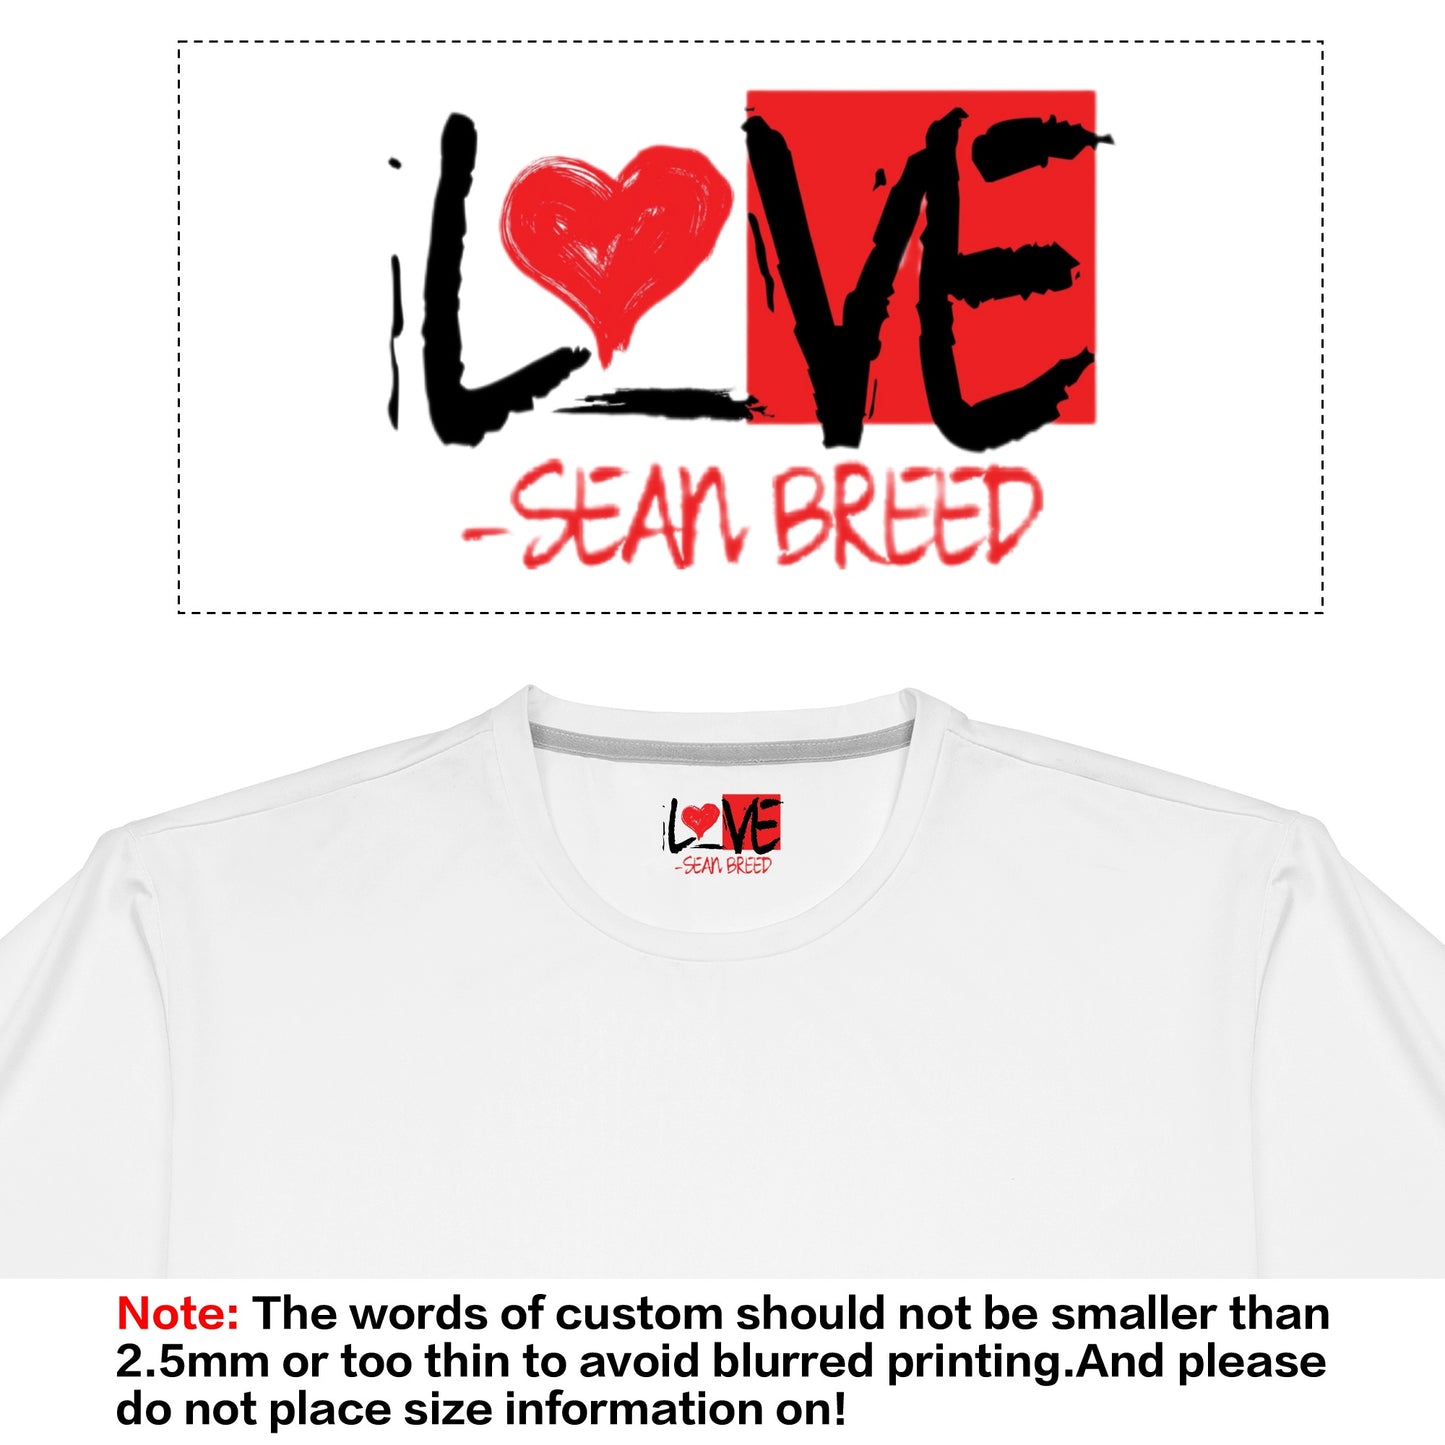 Sean Breed Black & White Unisex Camo L🖤VE Hoodie